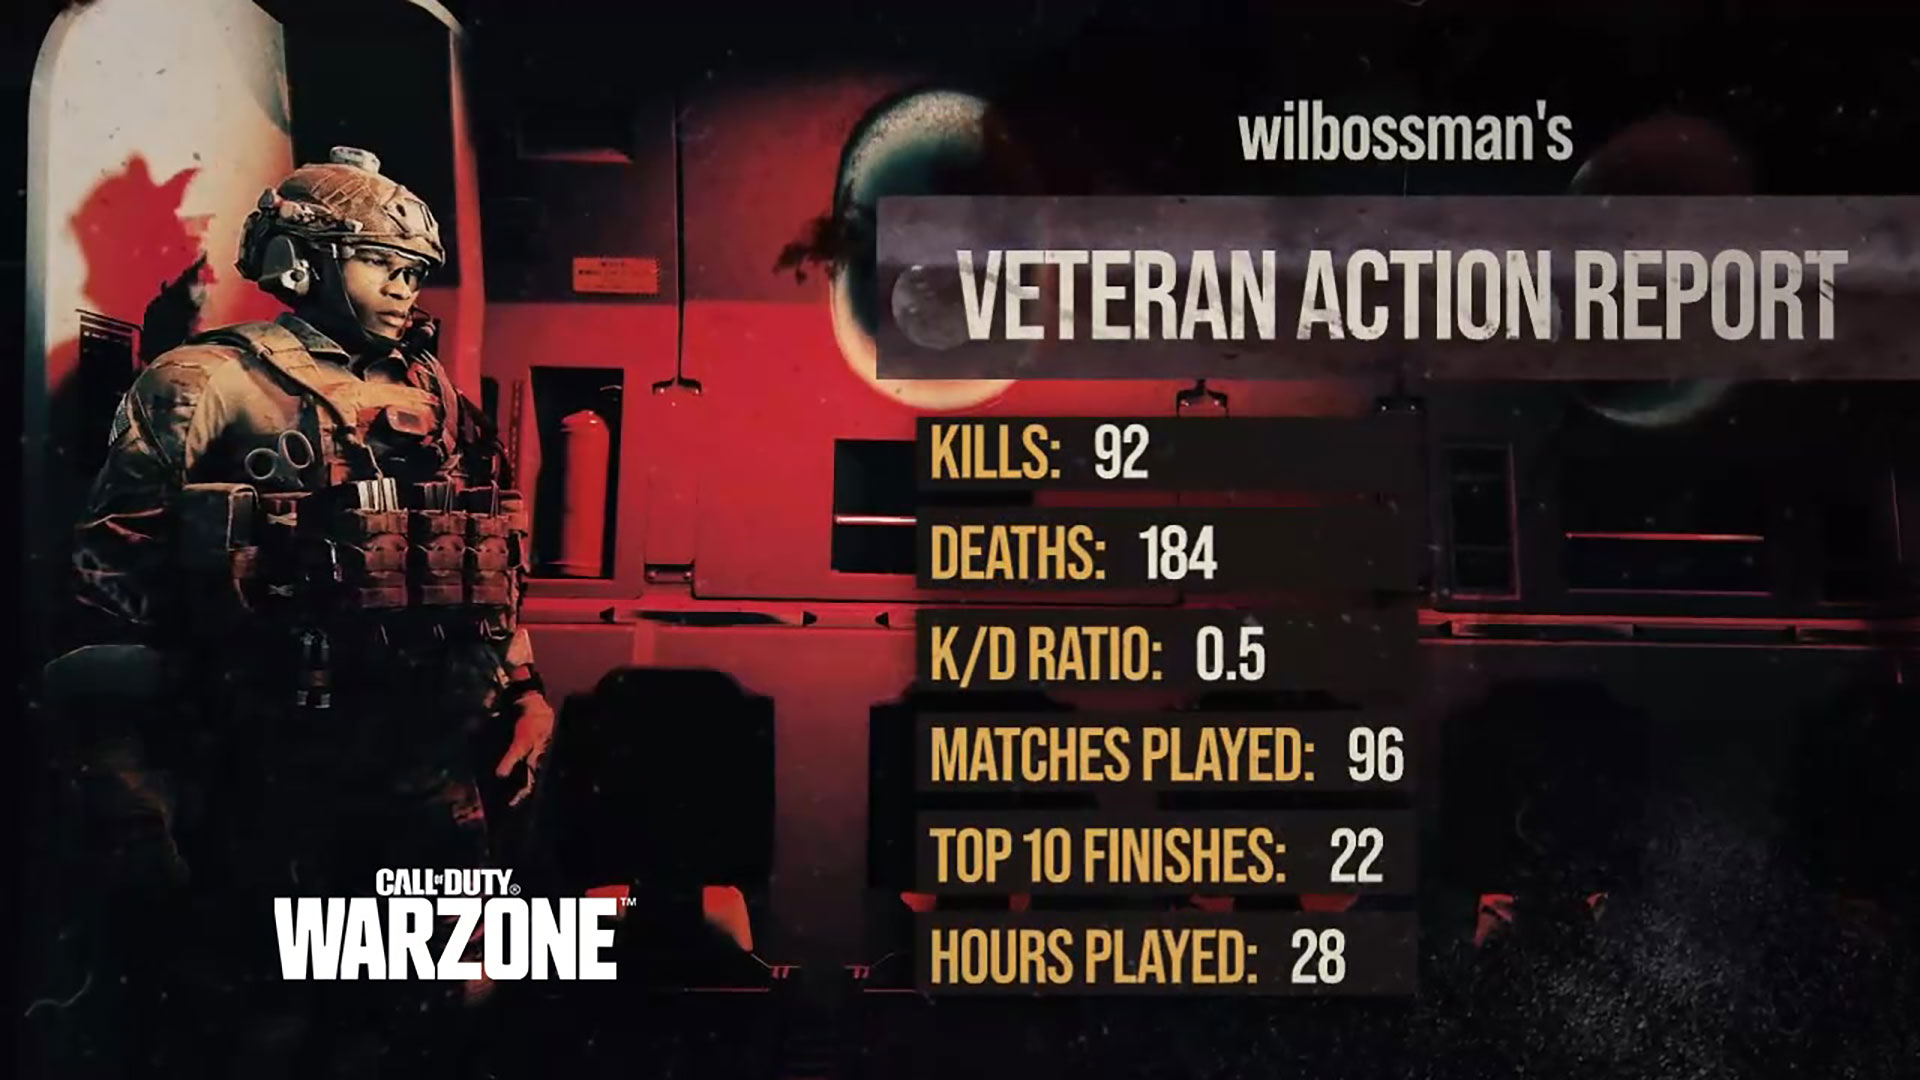 Warzone Legacy video